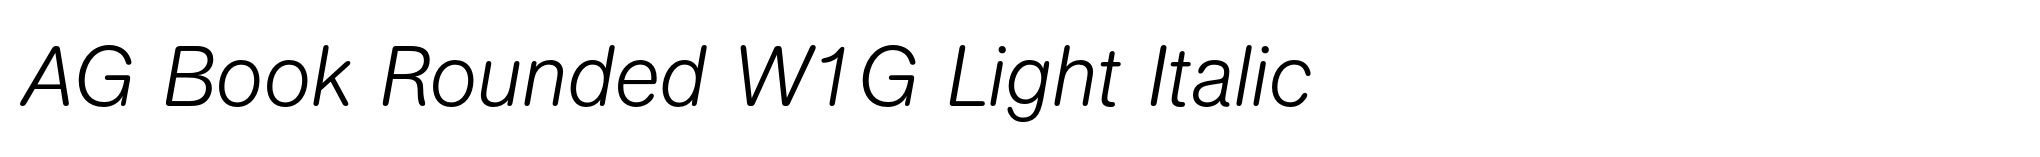 AG Book Rounded W1G Light Italic image